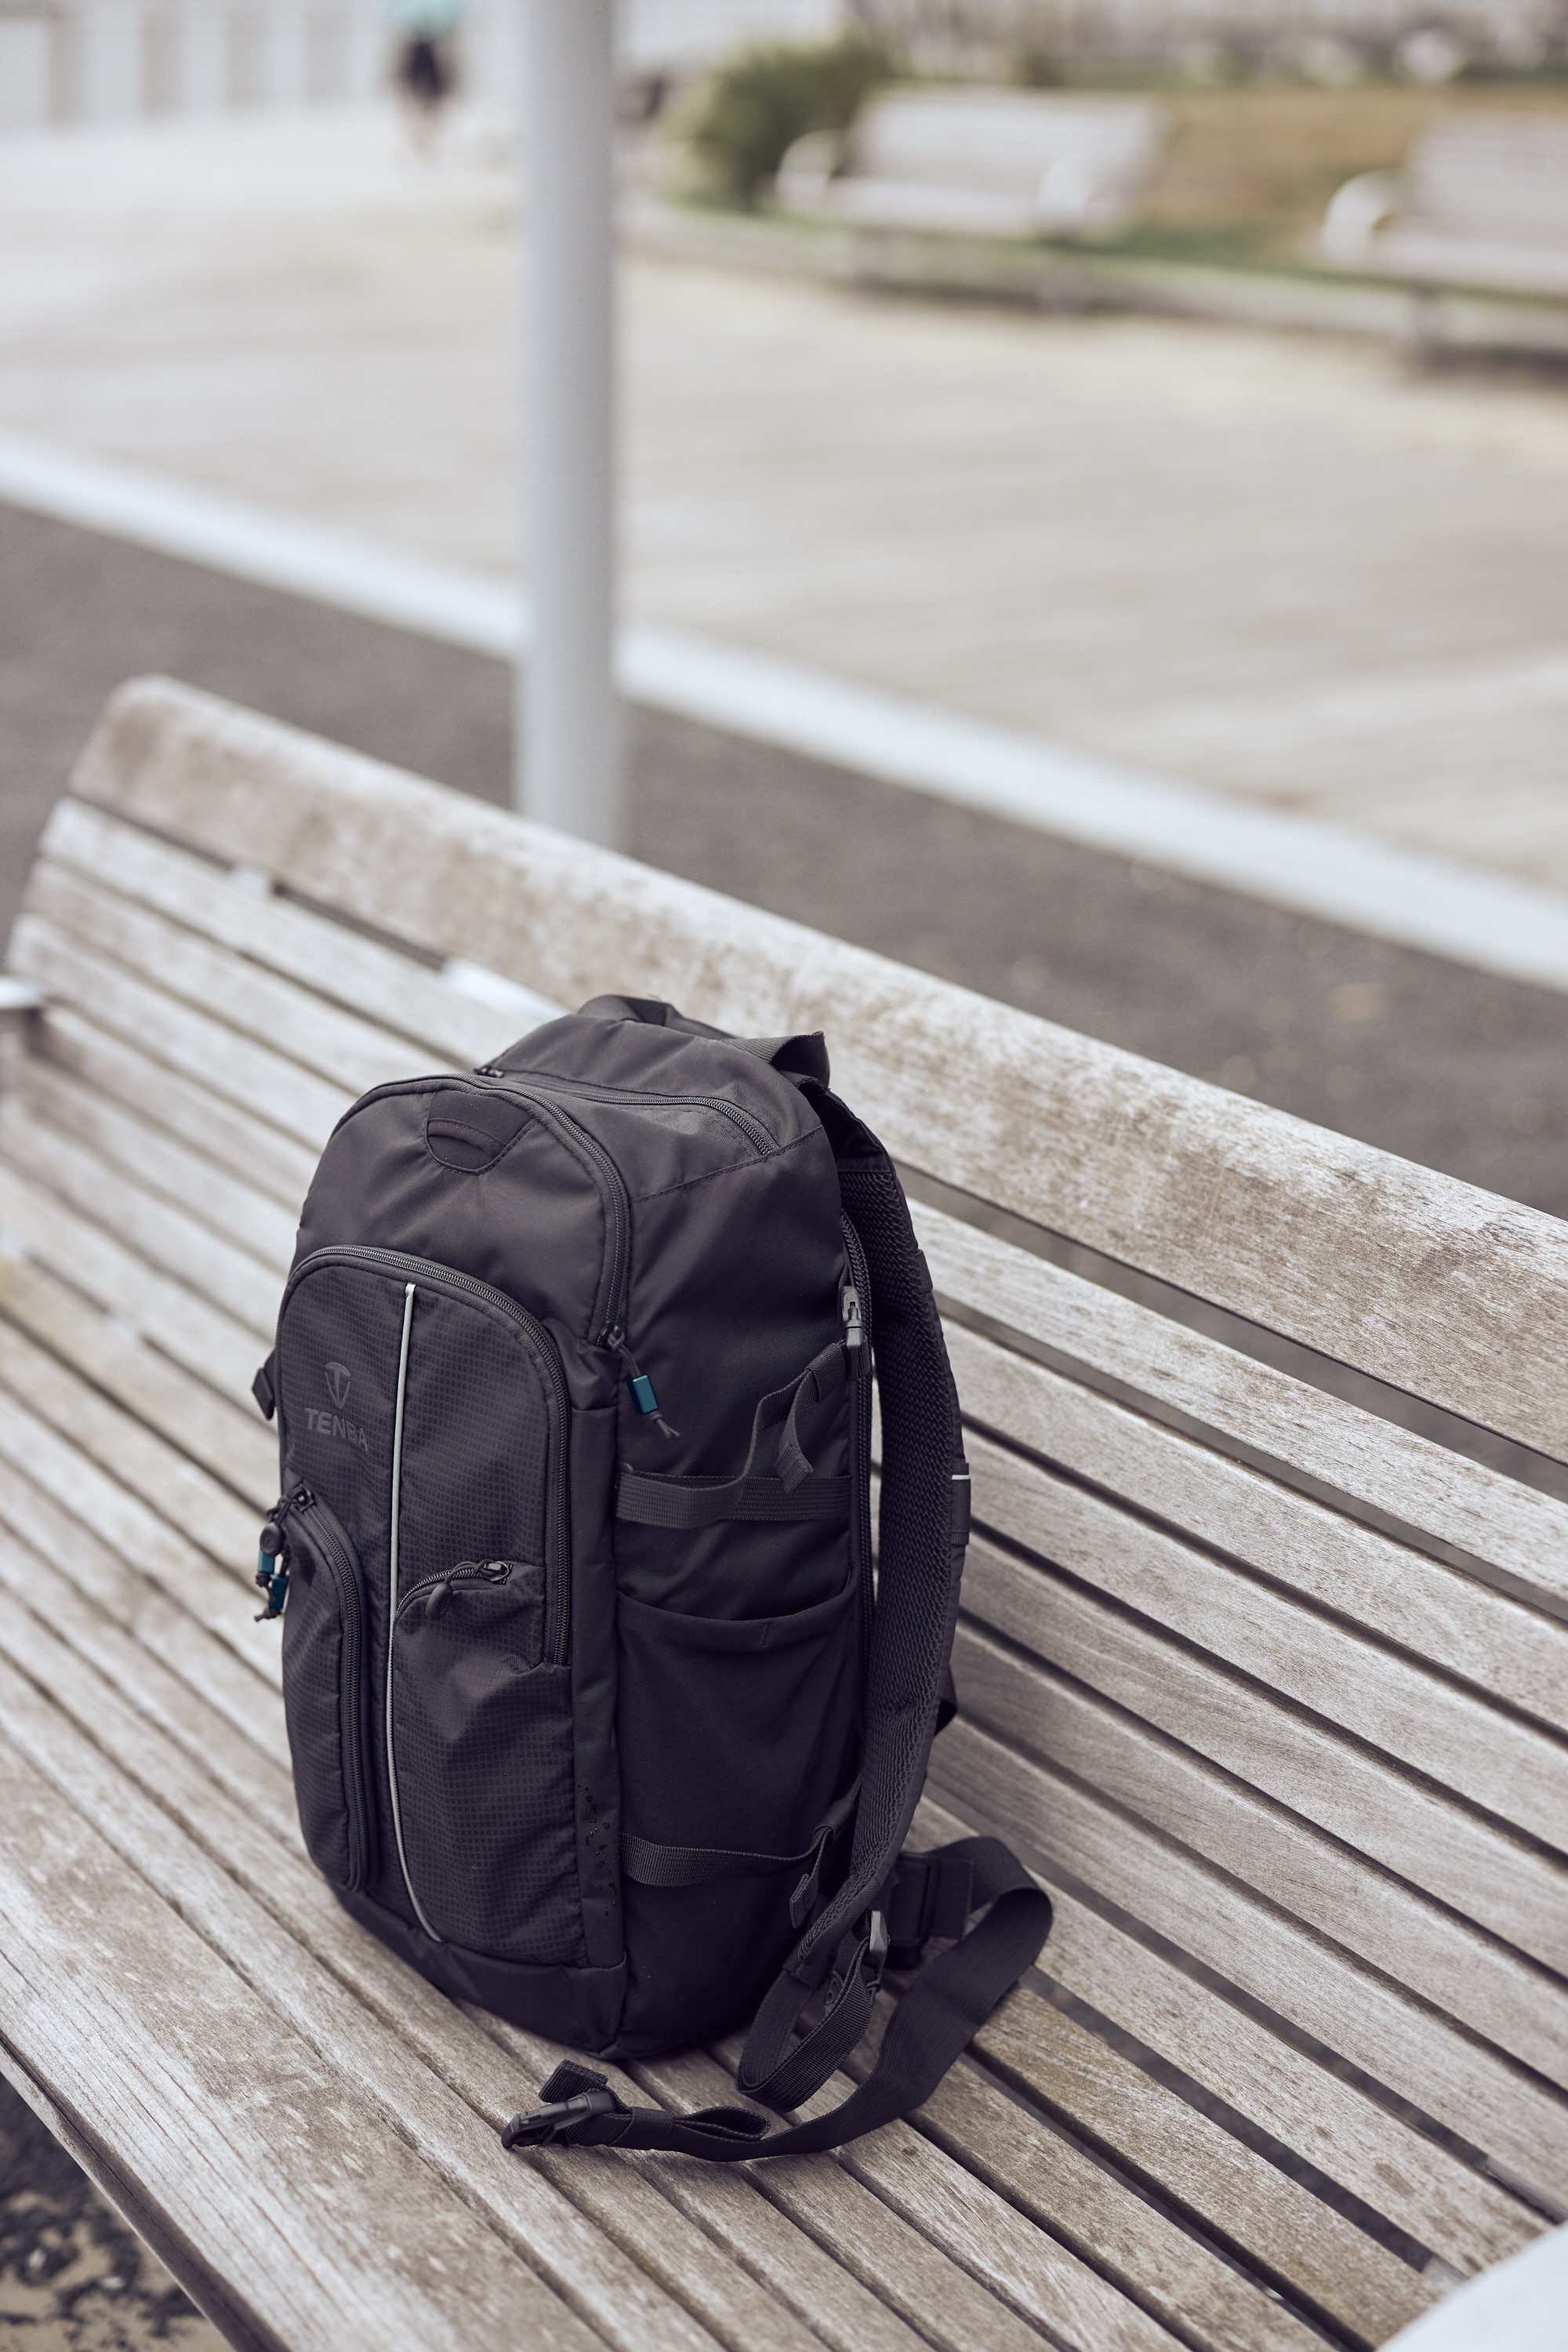 Review: 16L Tenba DSLR In-Between Shootout Backpack (The Bag)